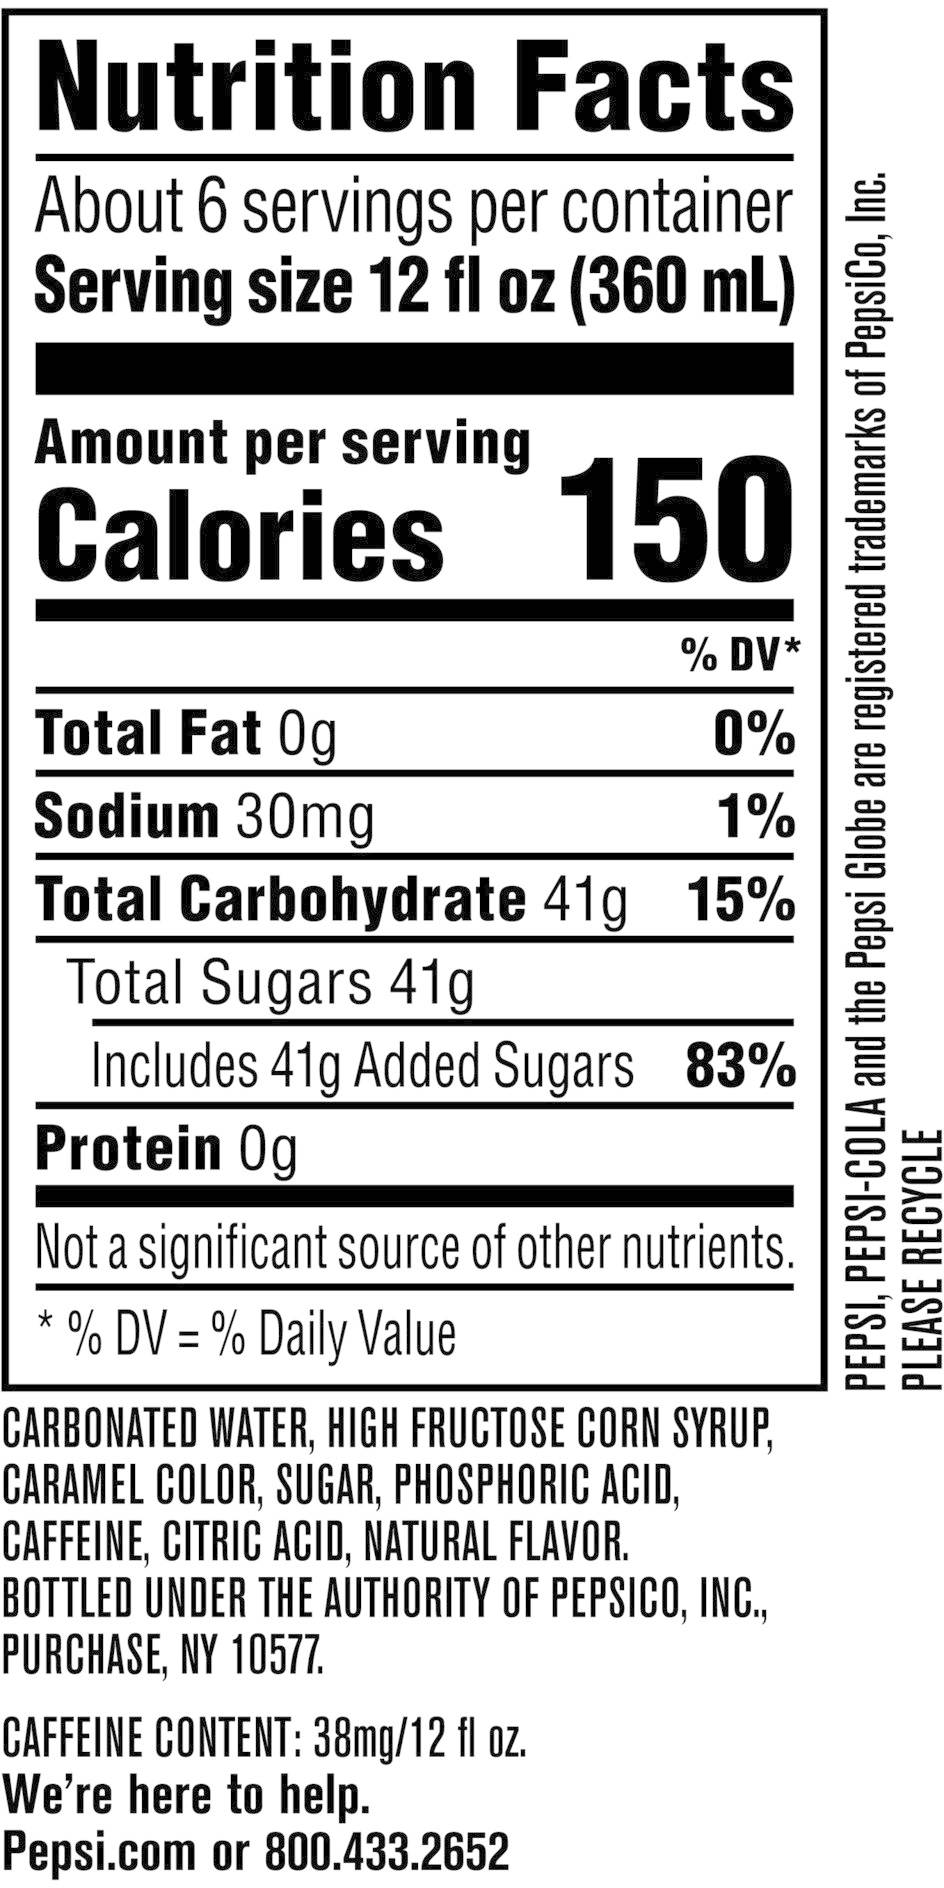 Image describing nutrition information for product Pepsi -KB testing